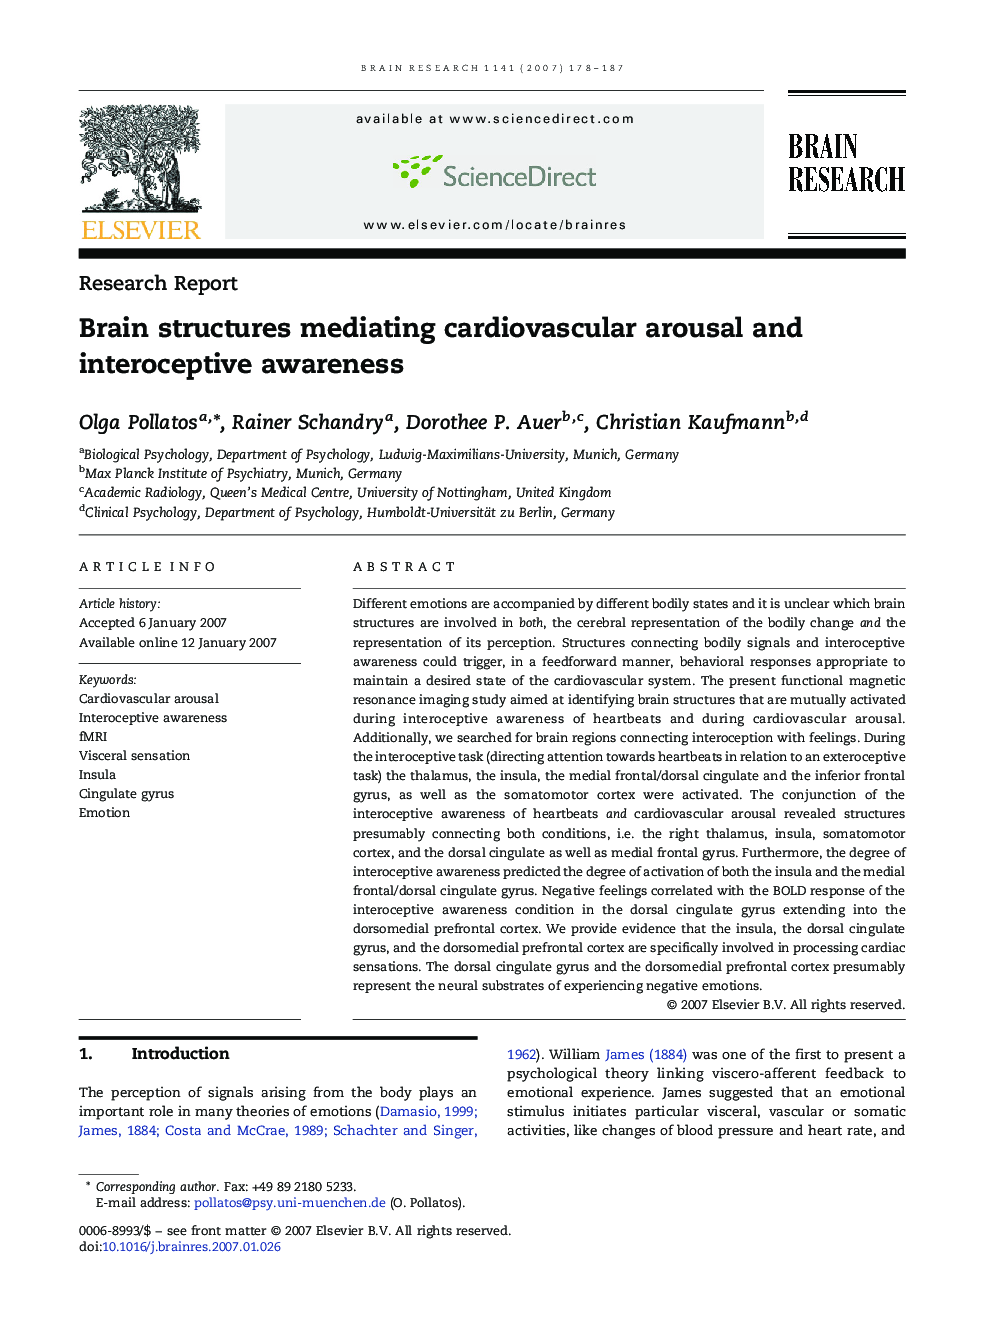 Brain structures mediating cardiovascular arousal and interoceptive awareness